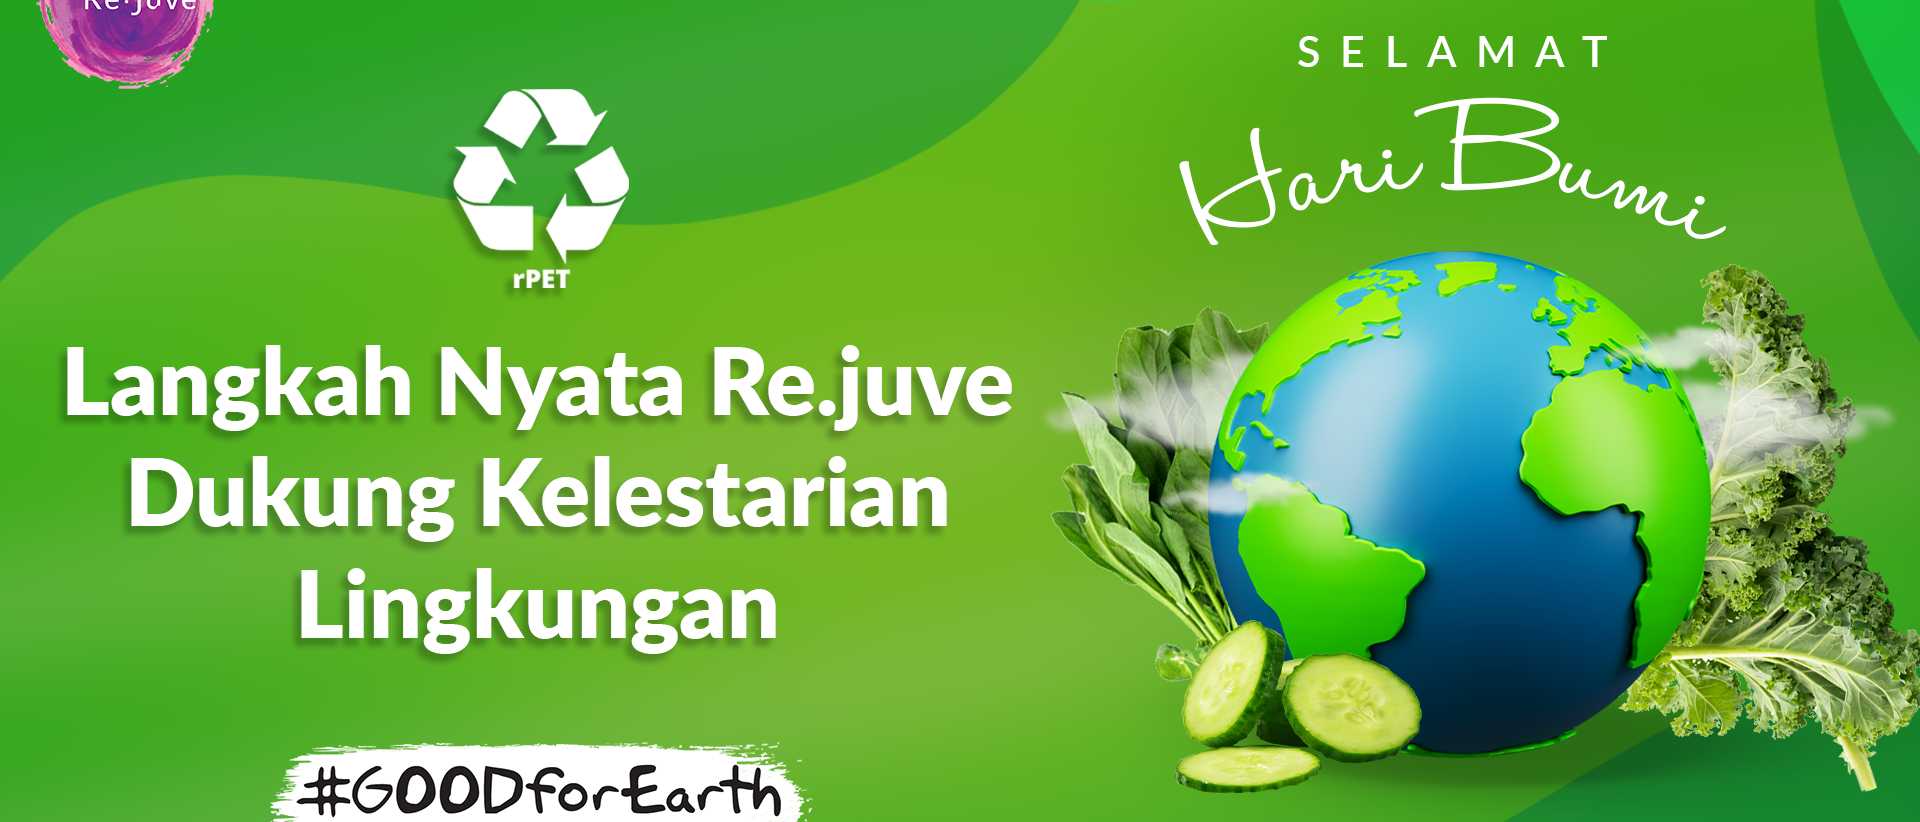 Langkah Nyata Re.juve Peduli Lingkungan pada Earth Day